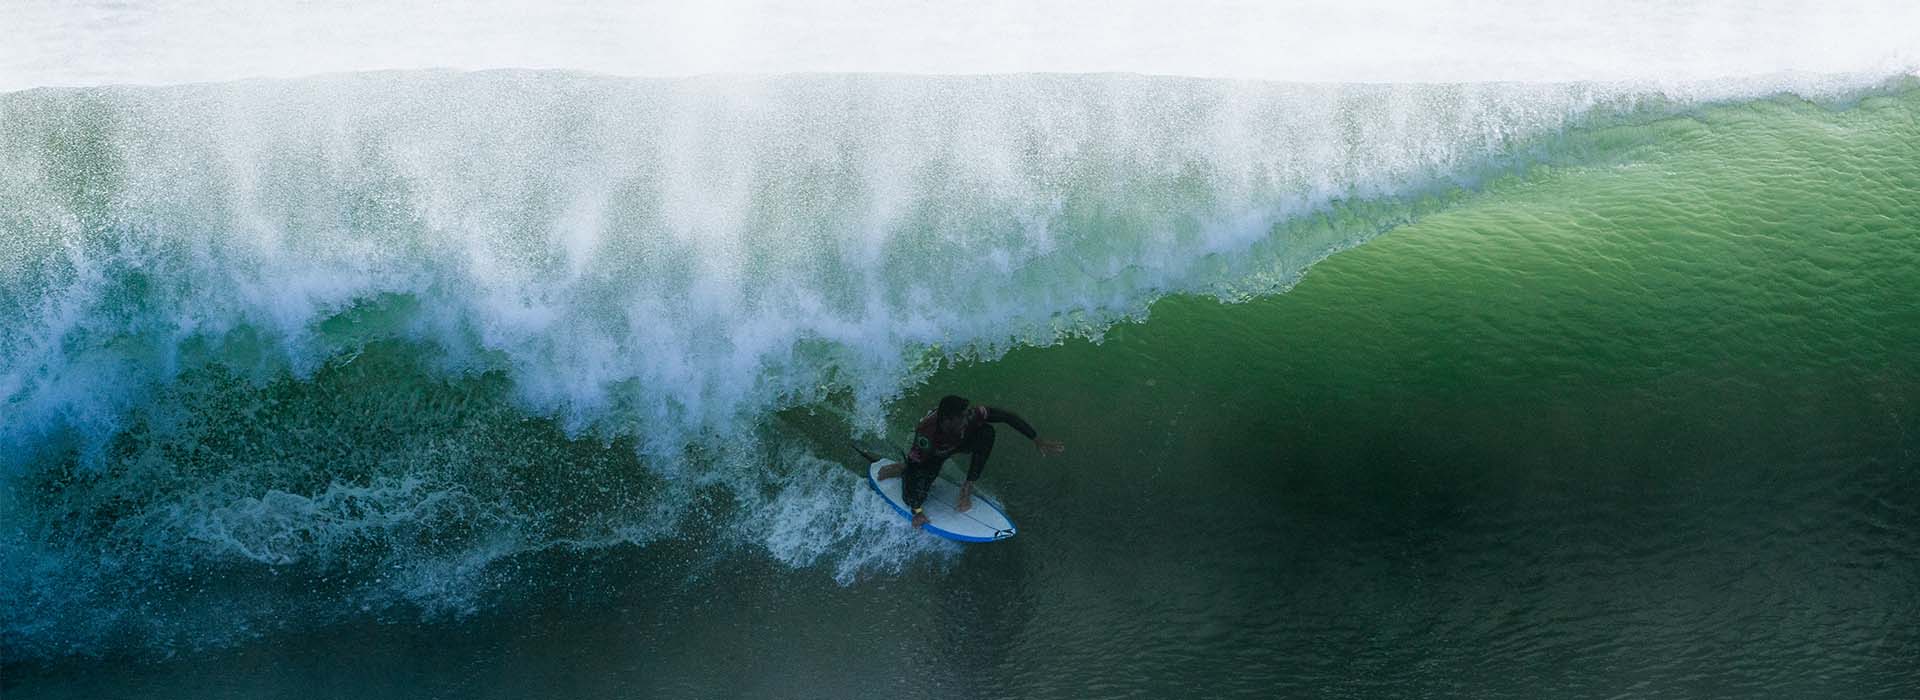 Joao Chianca surfing his winning wave. 